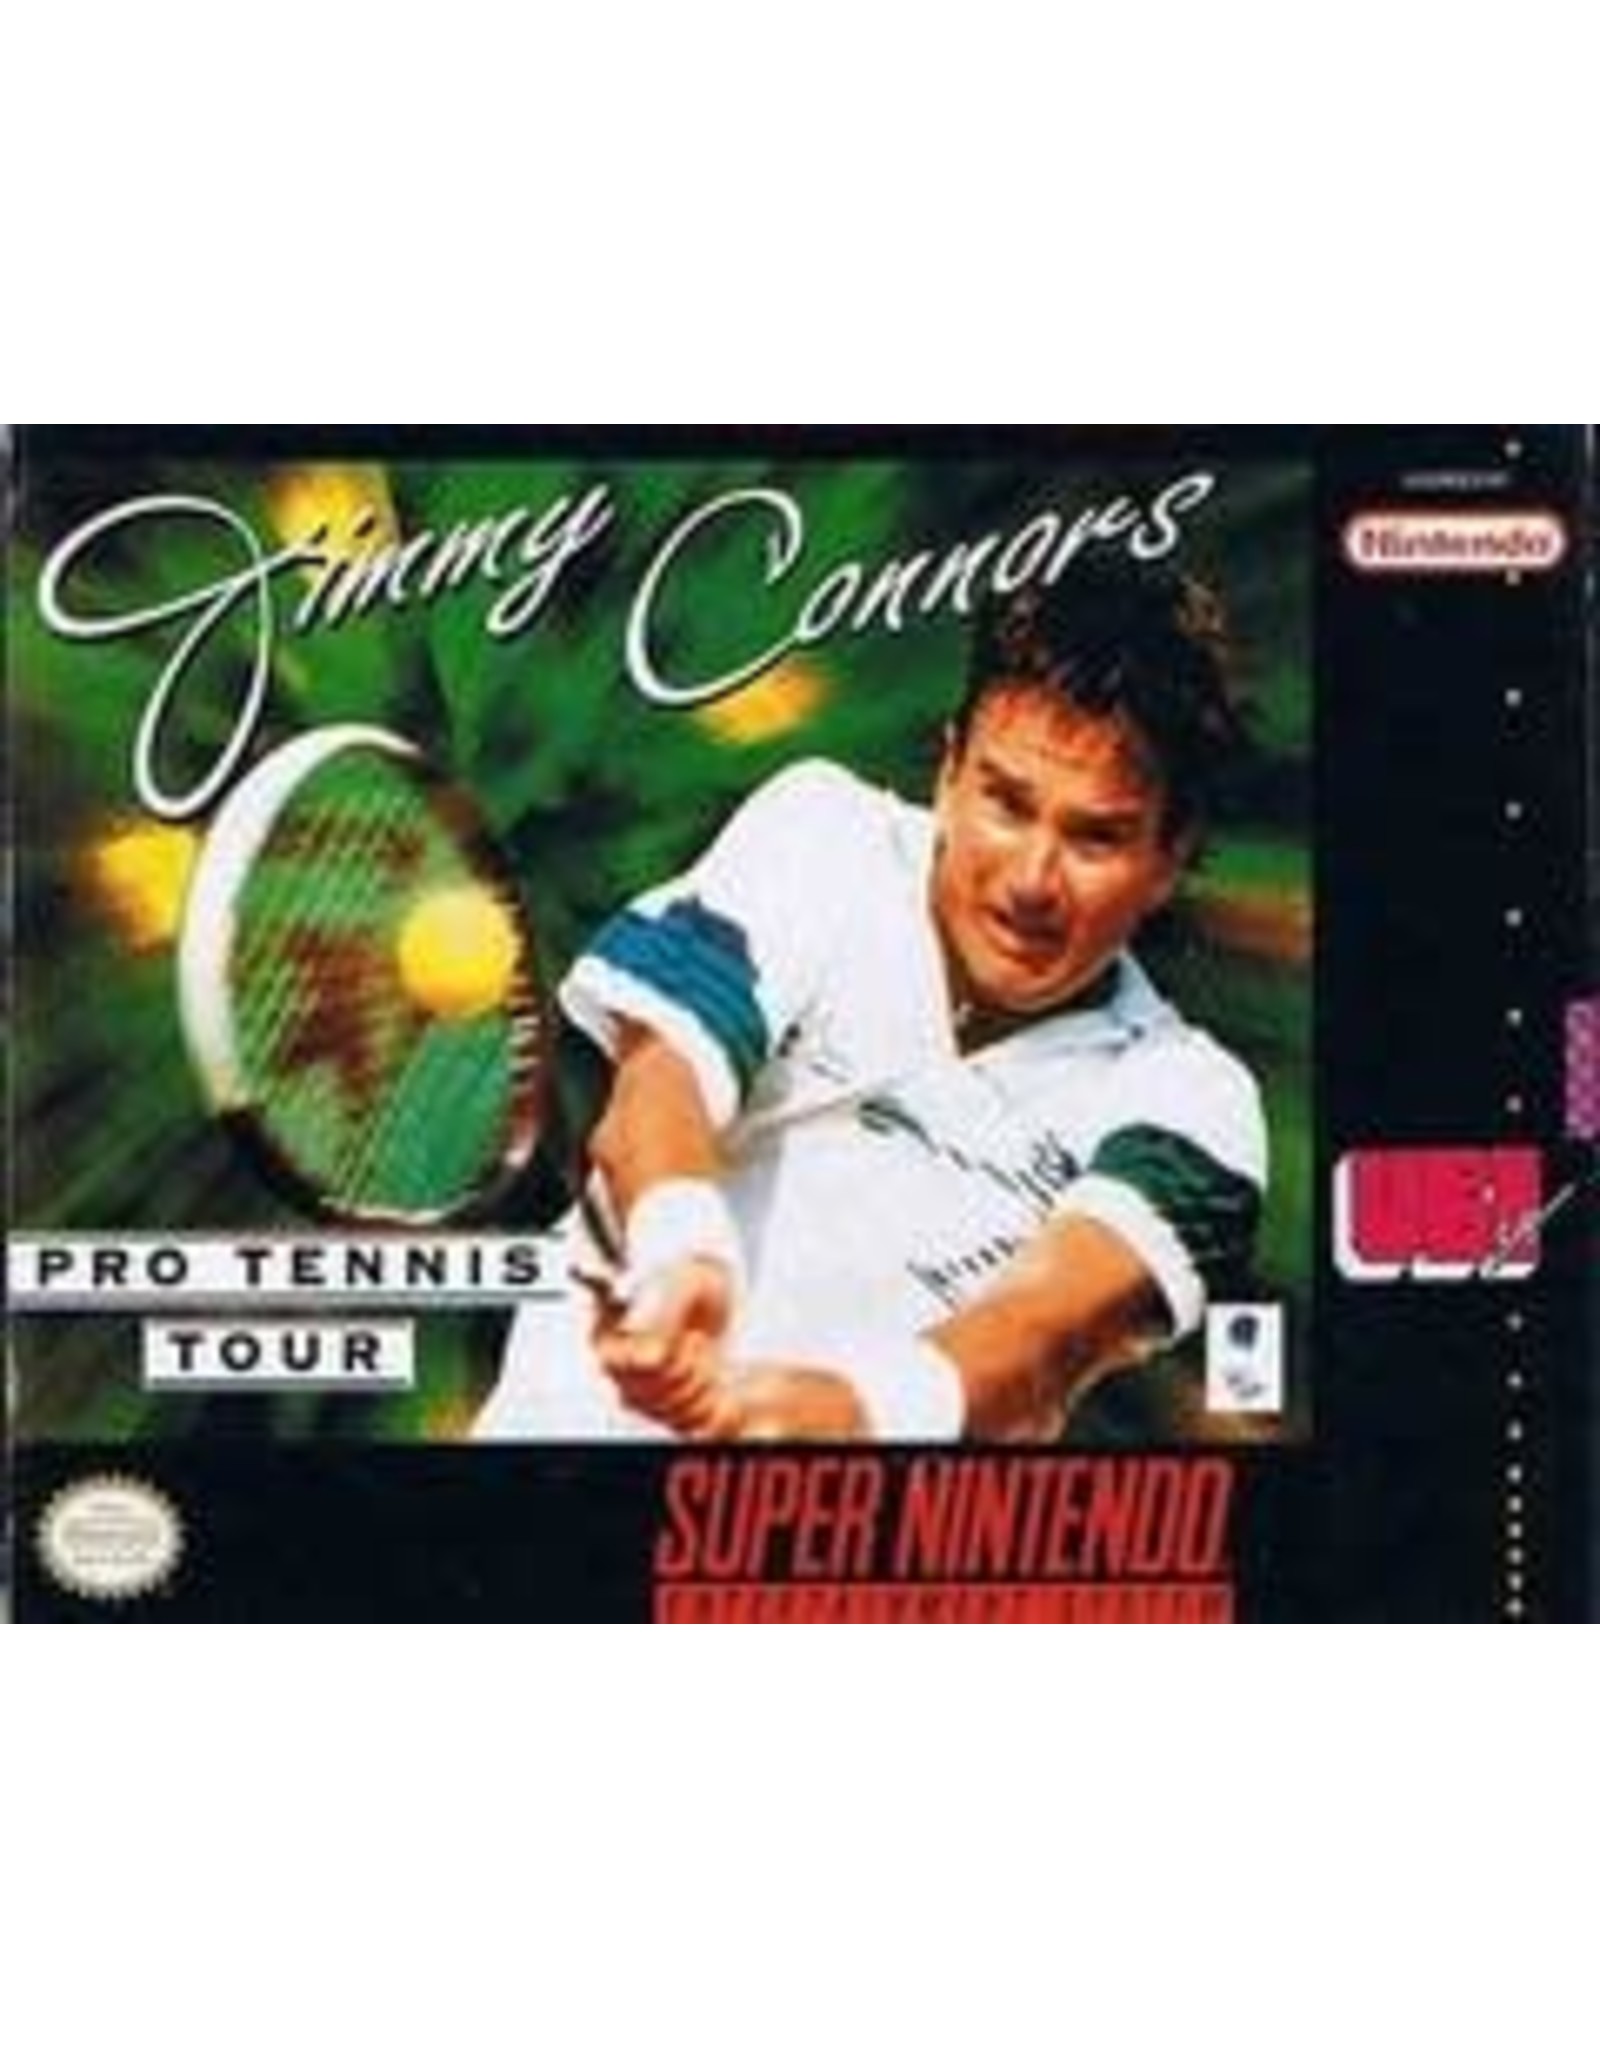 Super Nintendo Jimmy Connors Pro Tennis Tour (Cart Only)